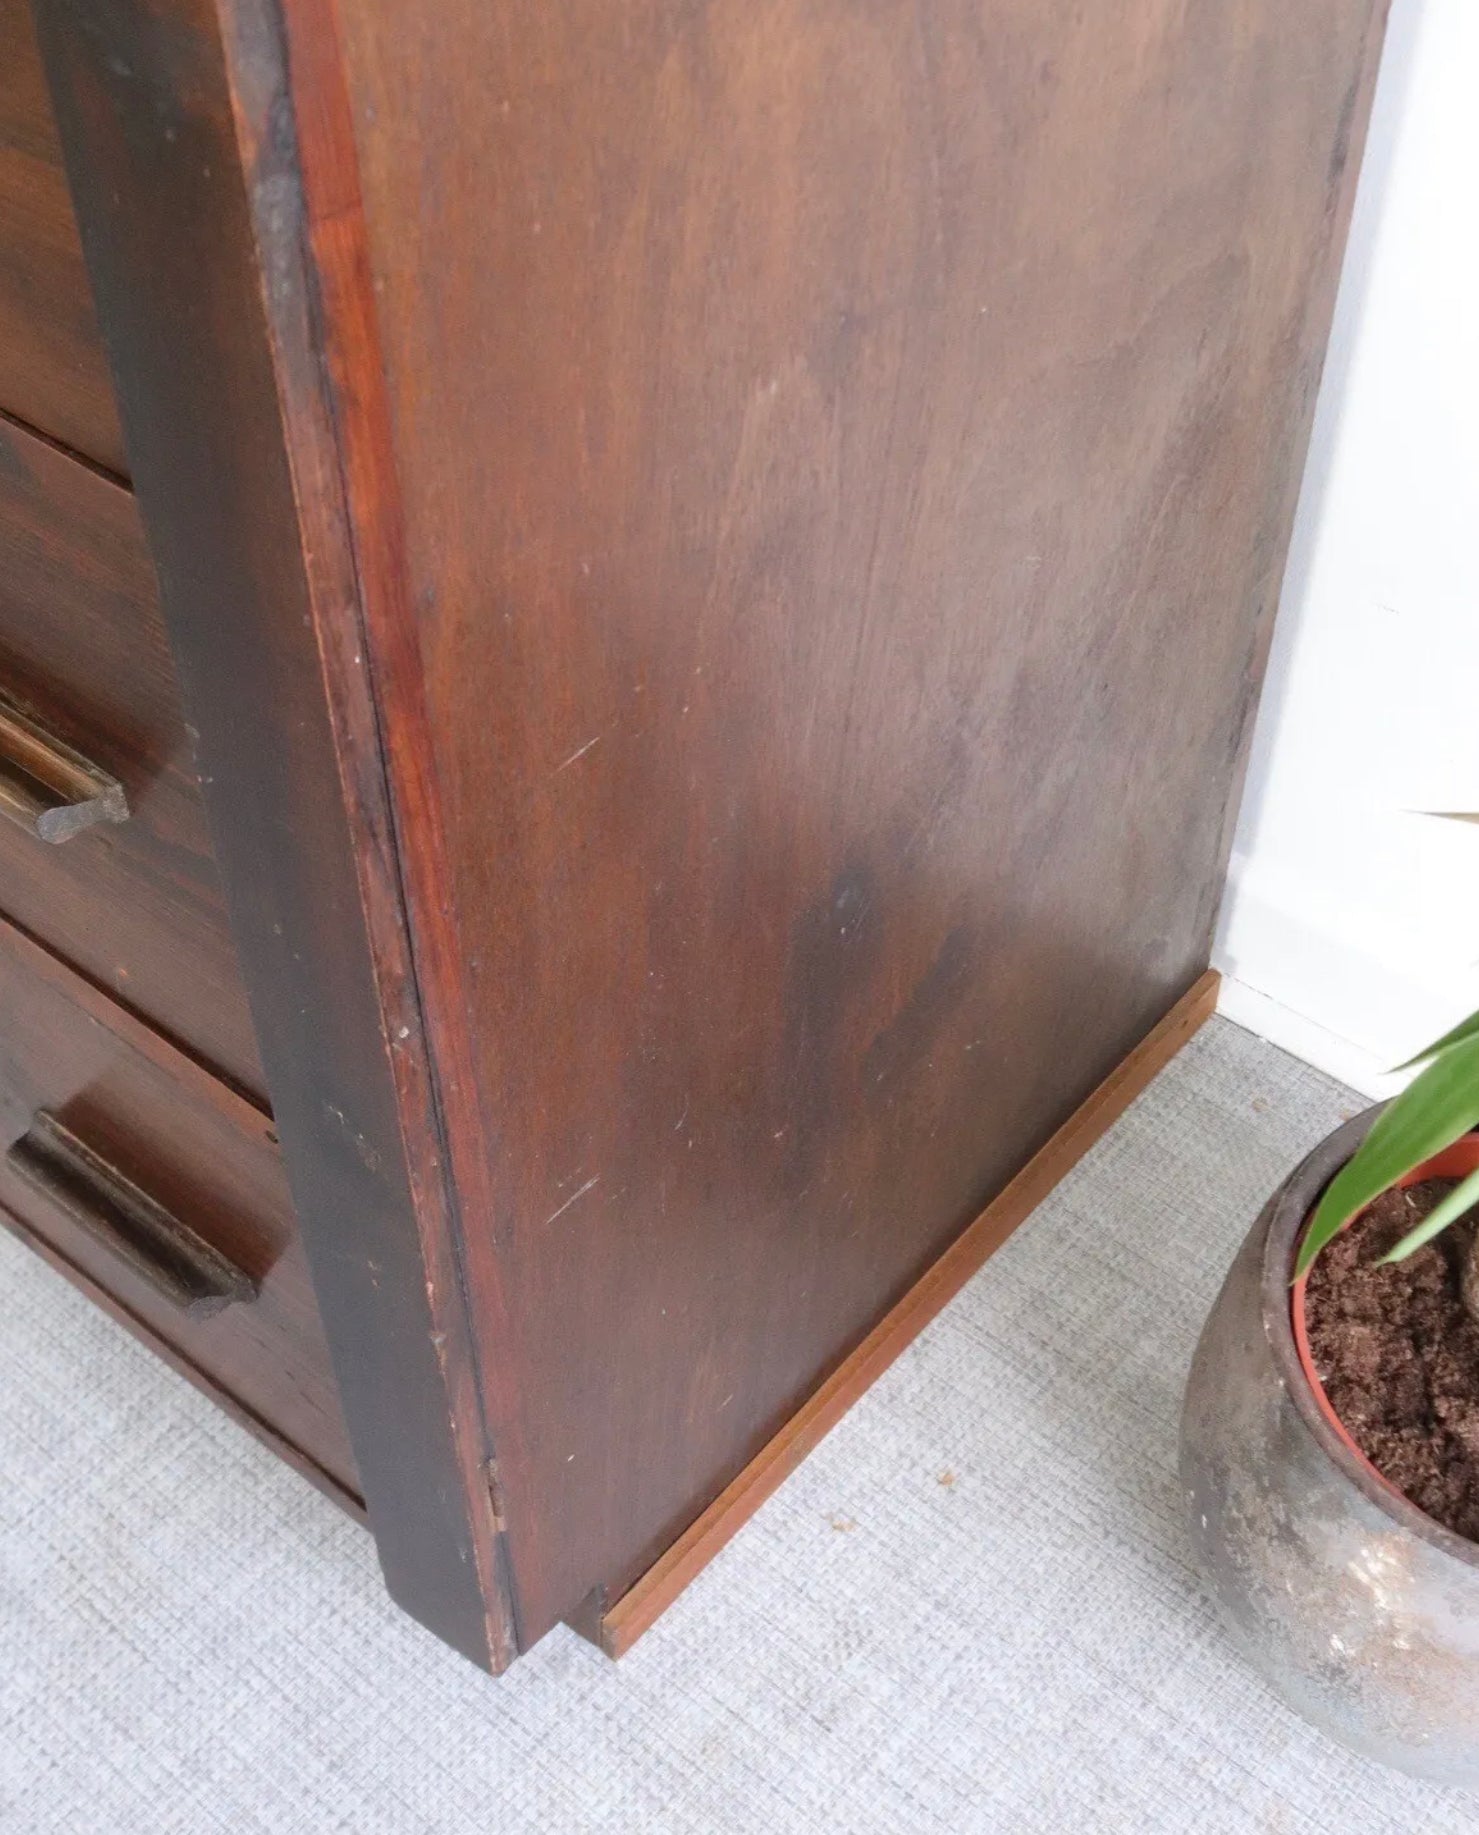 Vintage Wooden filing cabinet - 1950s Retro Home Office Storage Art Deco - teakyfinders